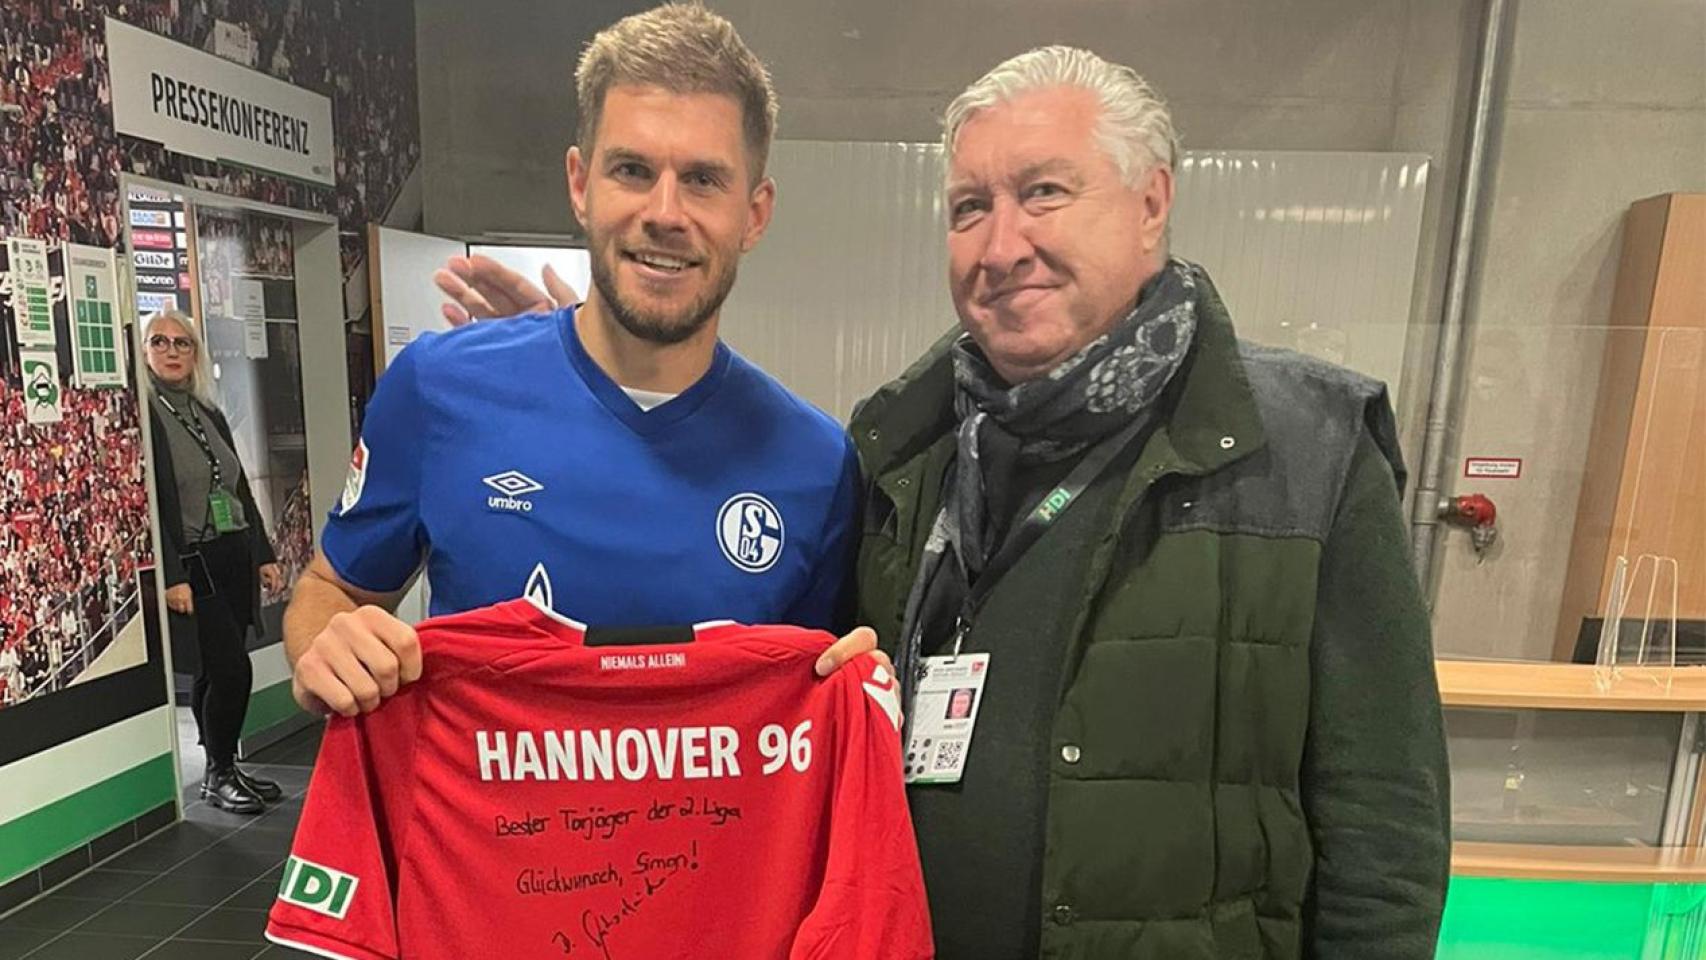 Dieter Schatzschneider, a la derecha, junto a un jugador del Schalke 04.